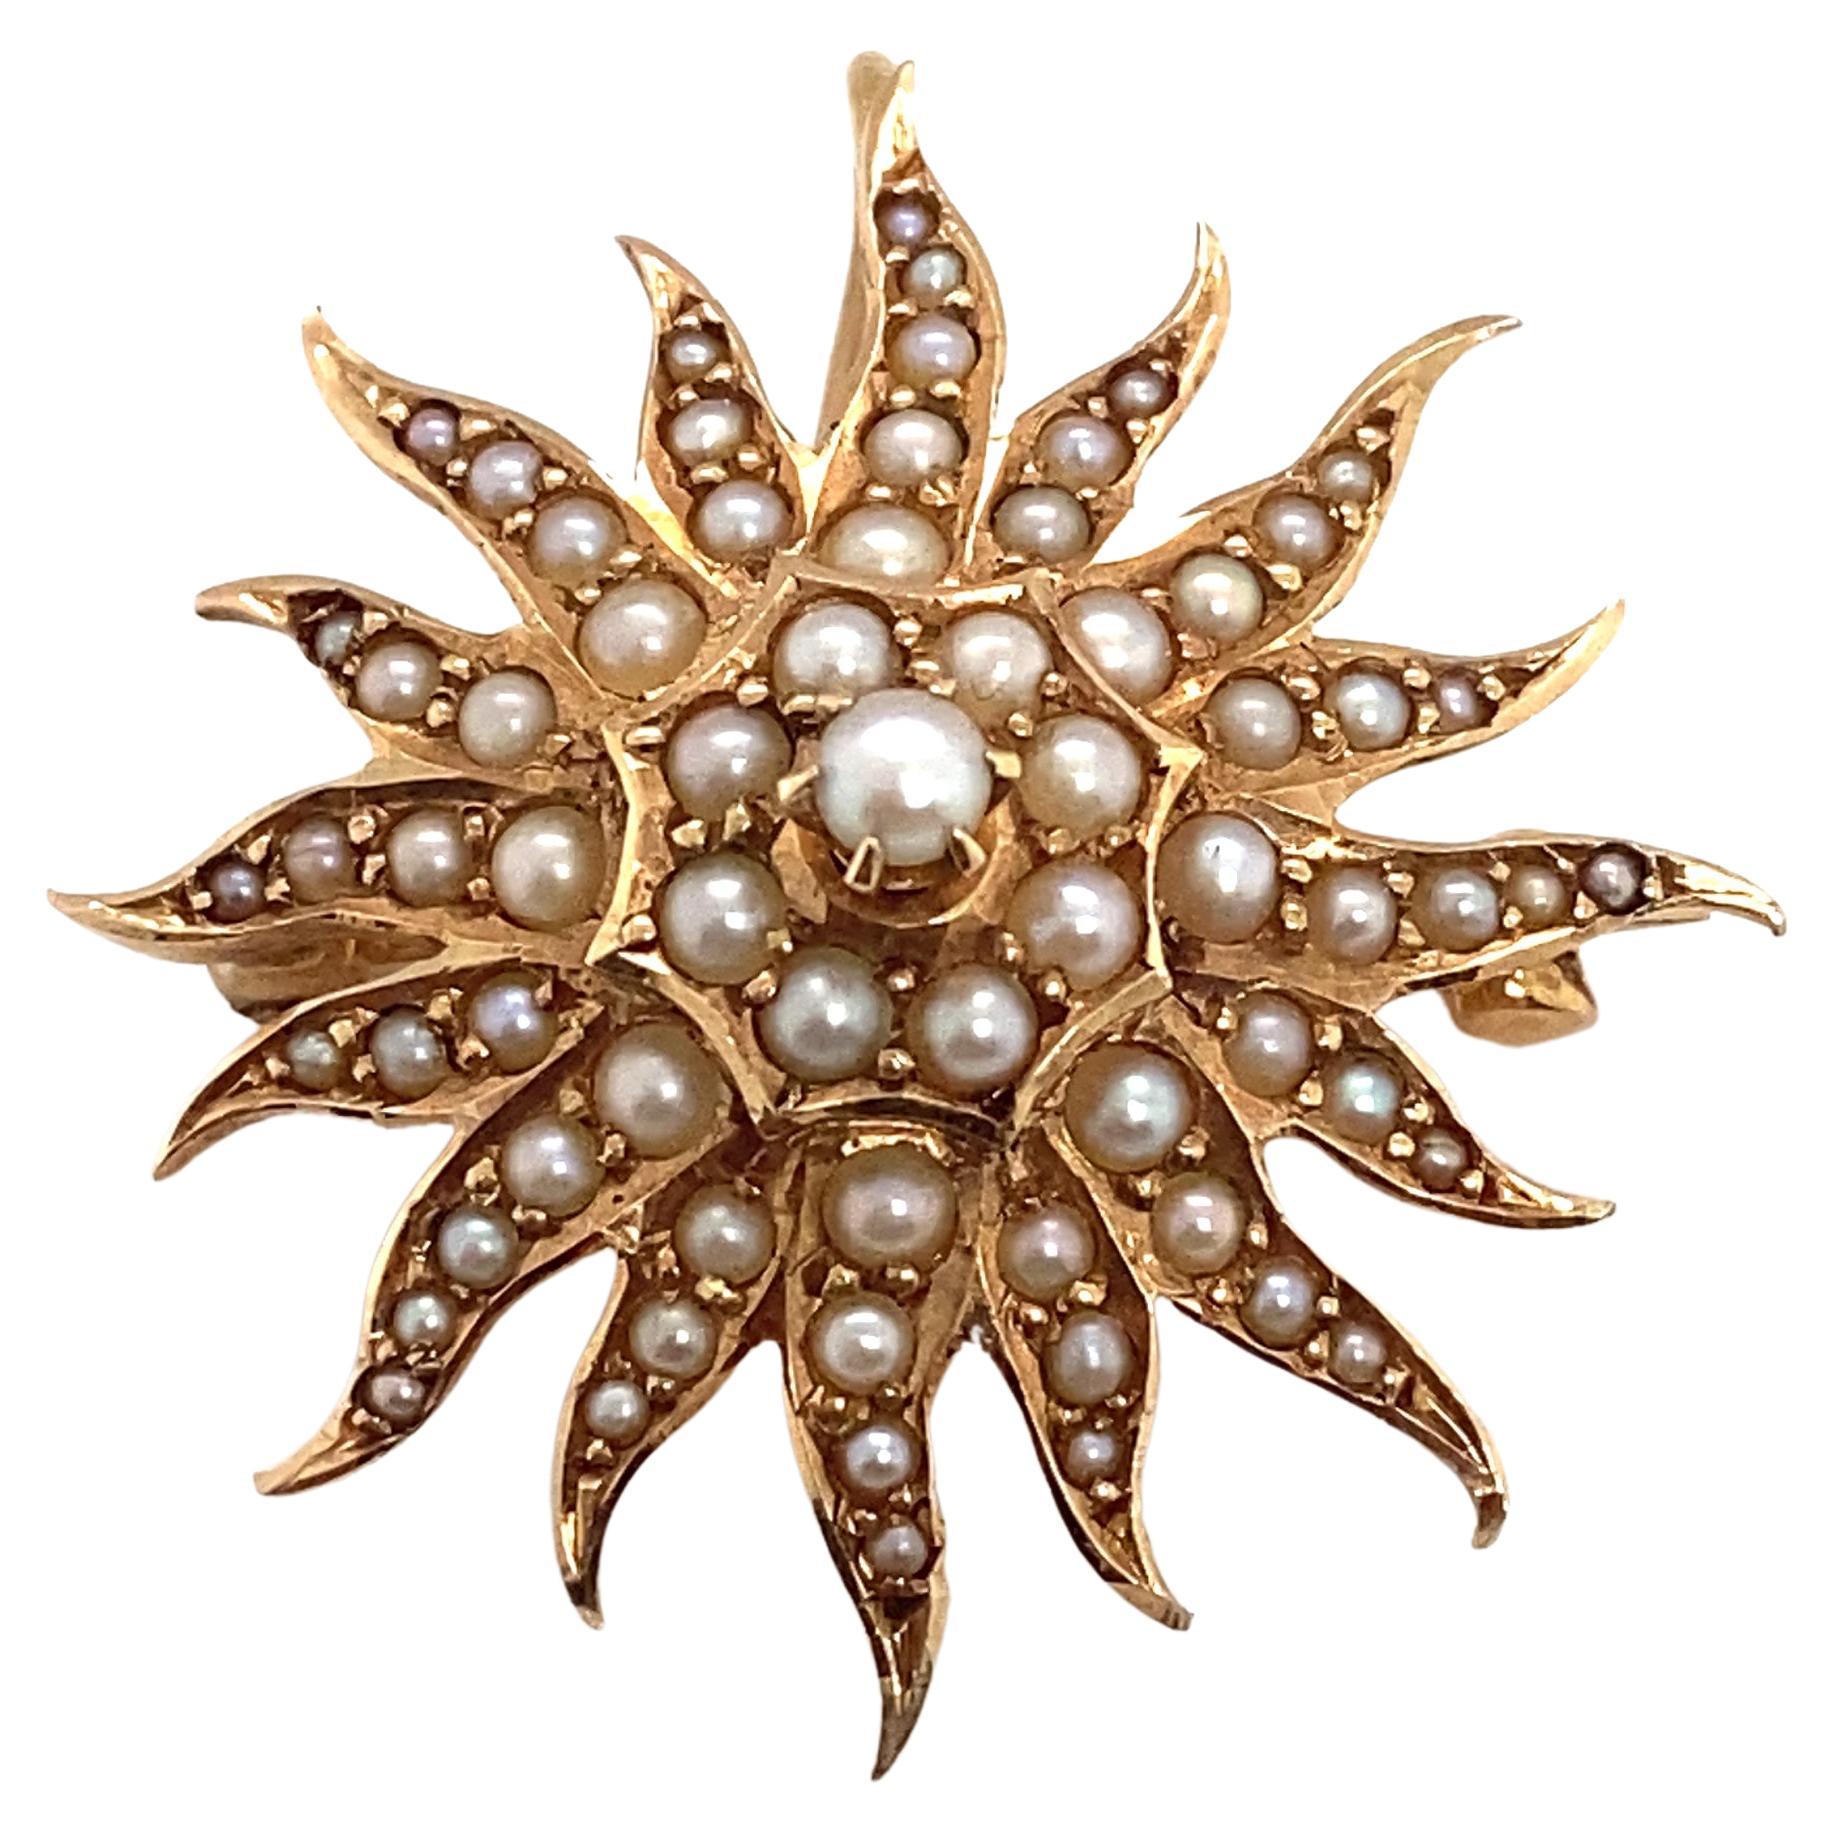 Circa 1890s Birks London Canada Sunburst Seed Pearl Brooch in 15 Karat Gold For Sale